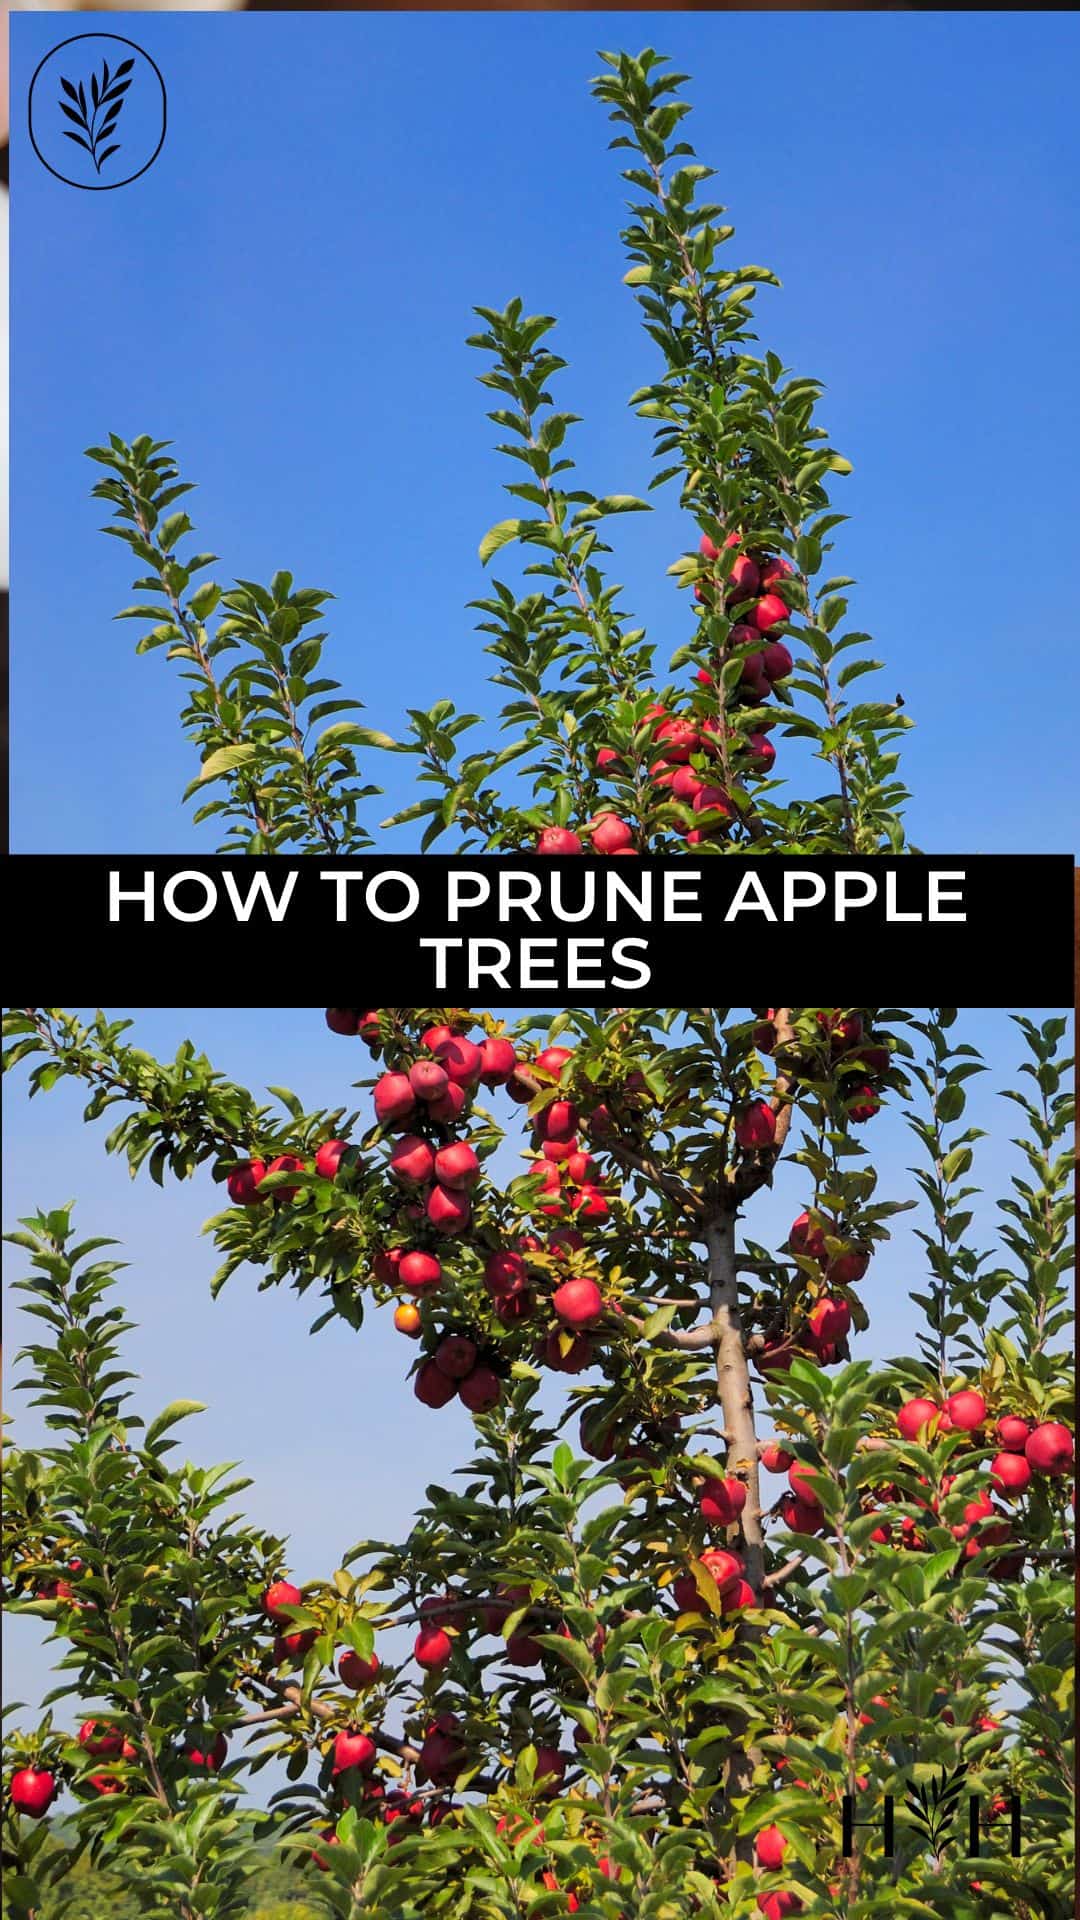 How to prune apple trees via @home4theharvest